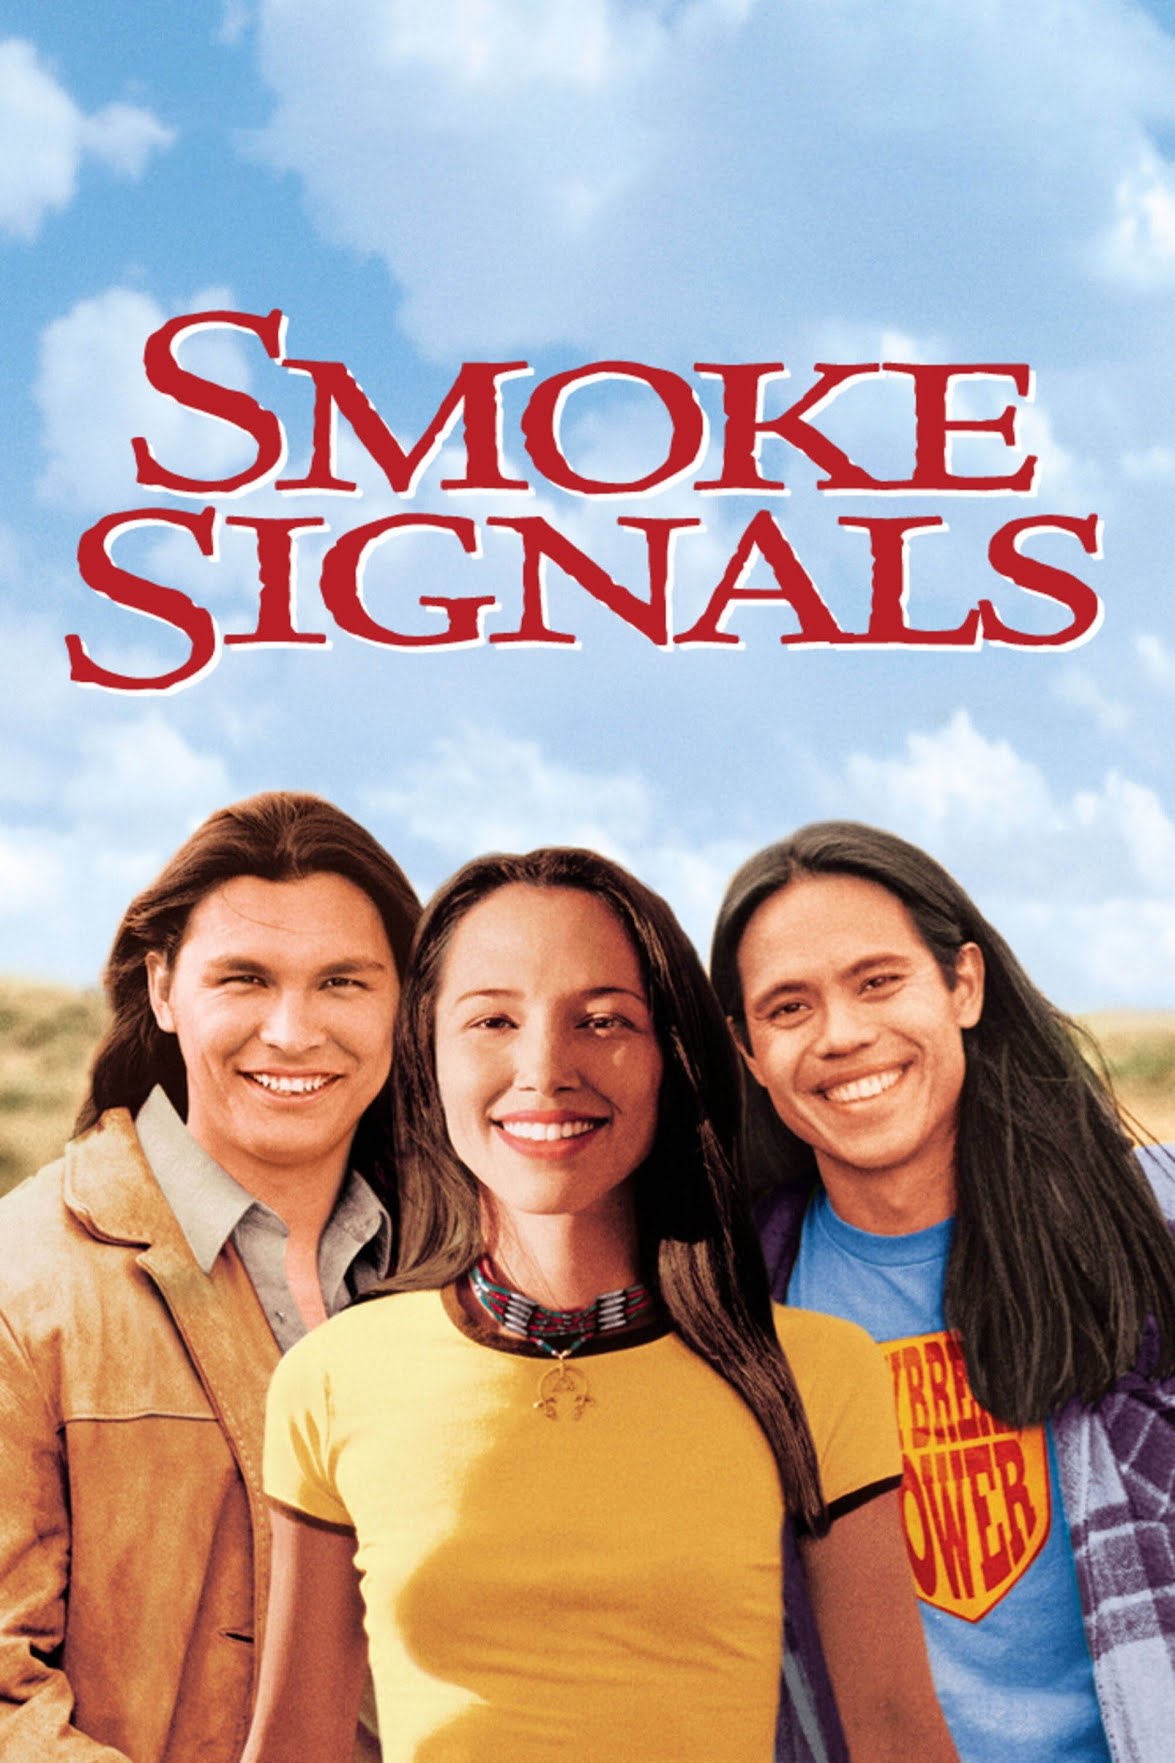 Image of "Smoke Signals" 